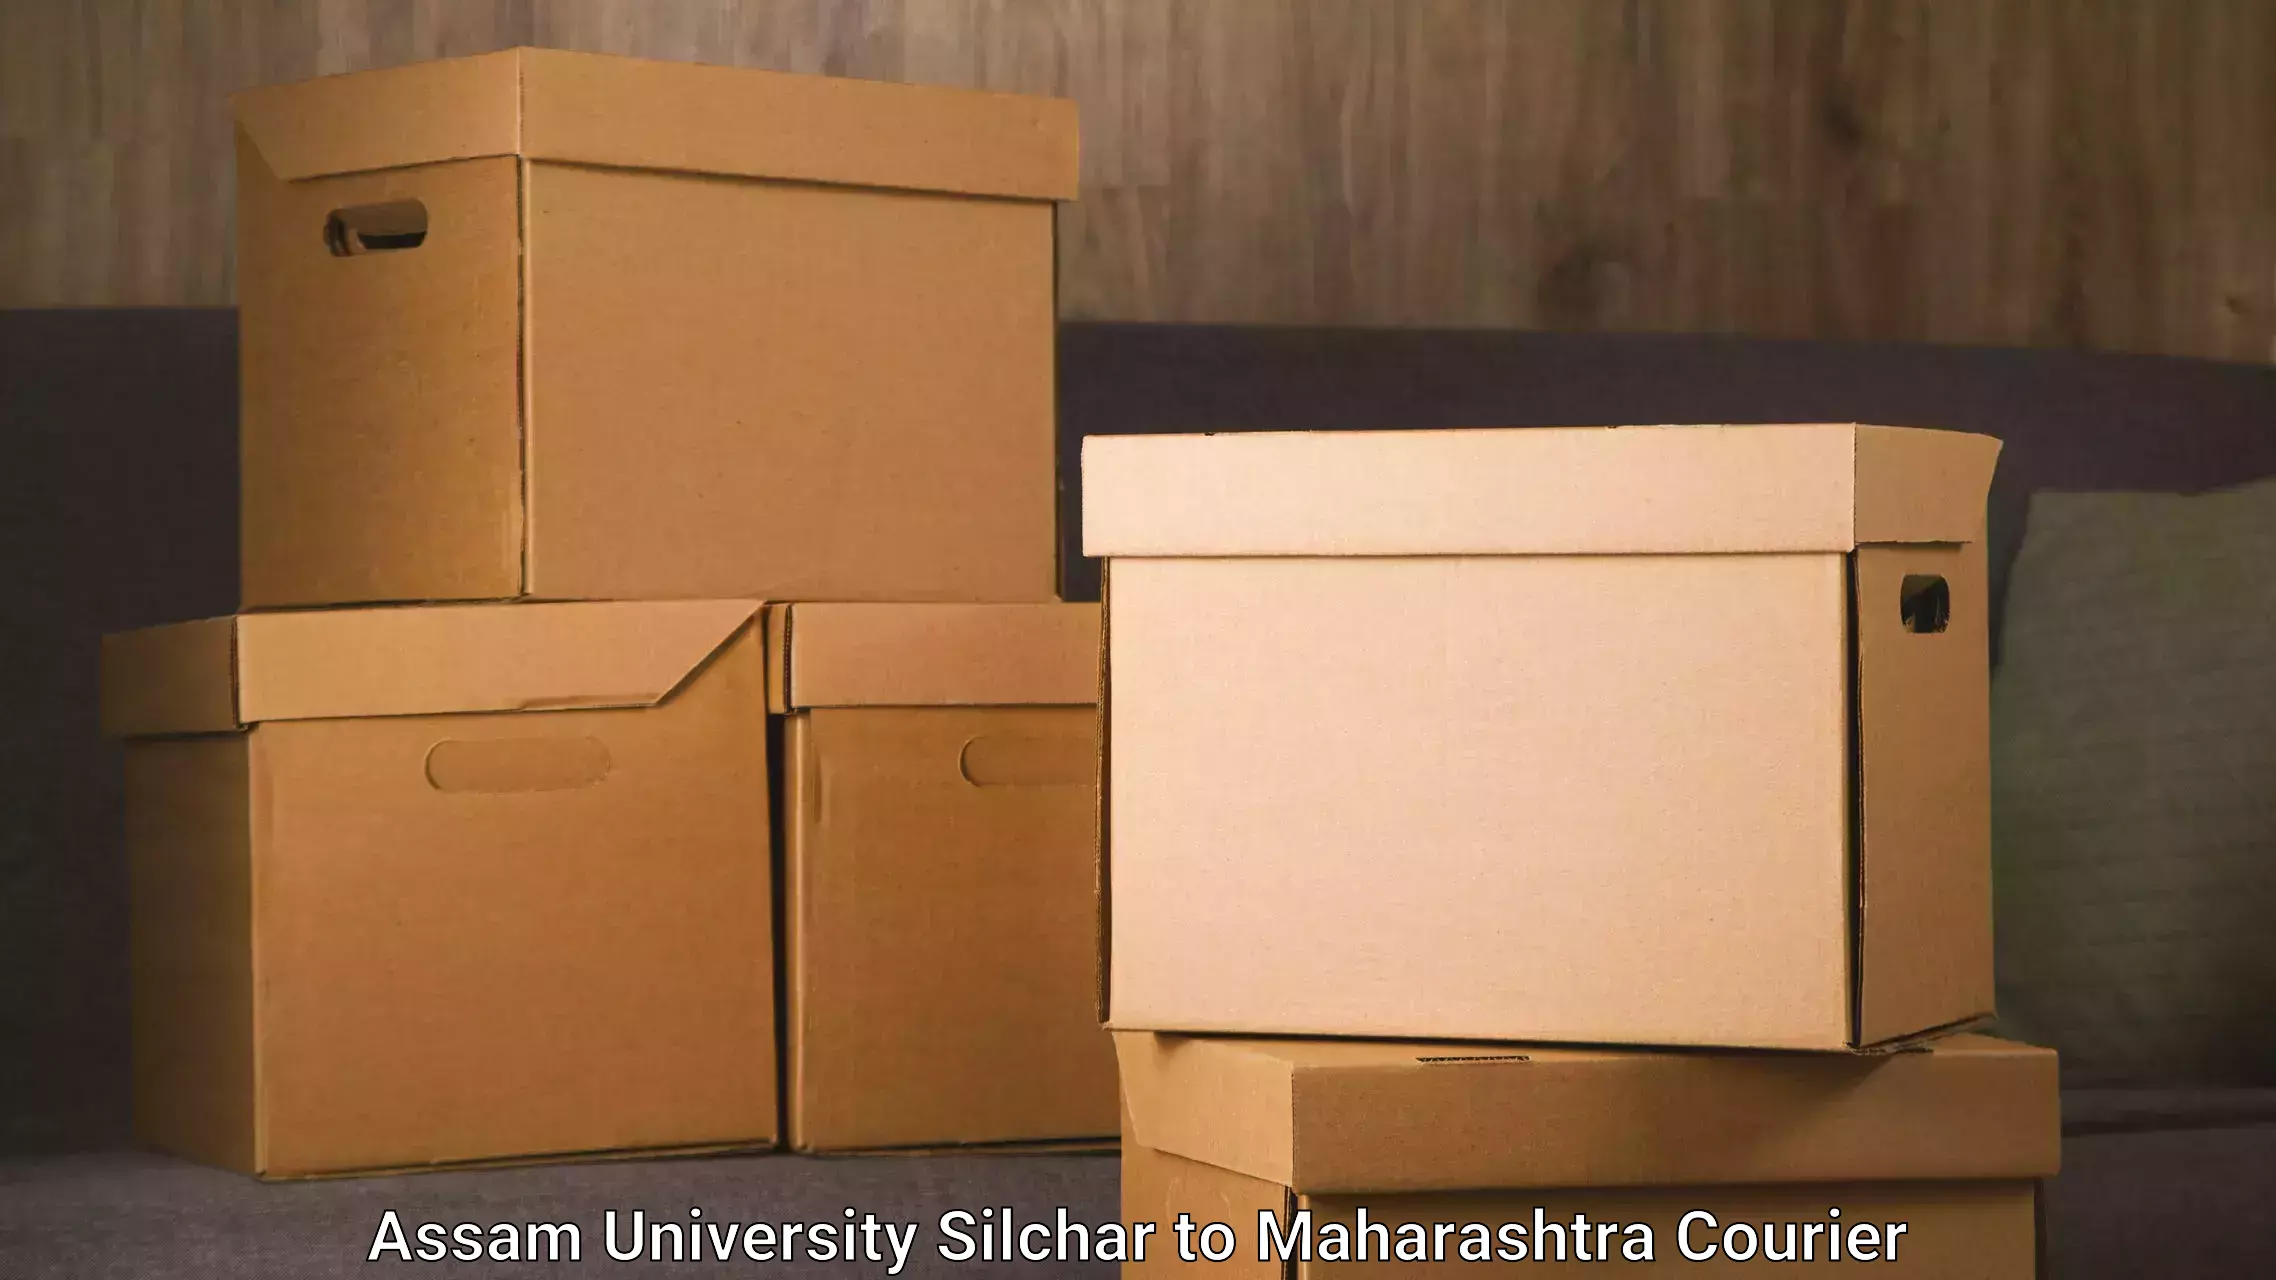 Next day courier Assam University Silchar to Maharashtra